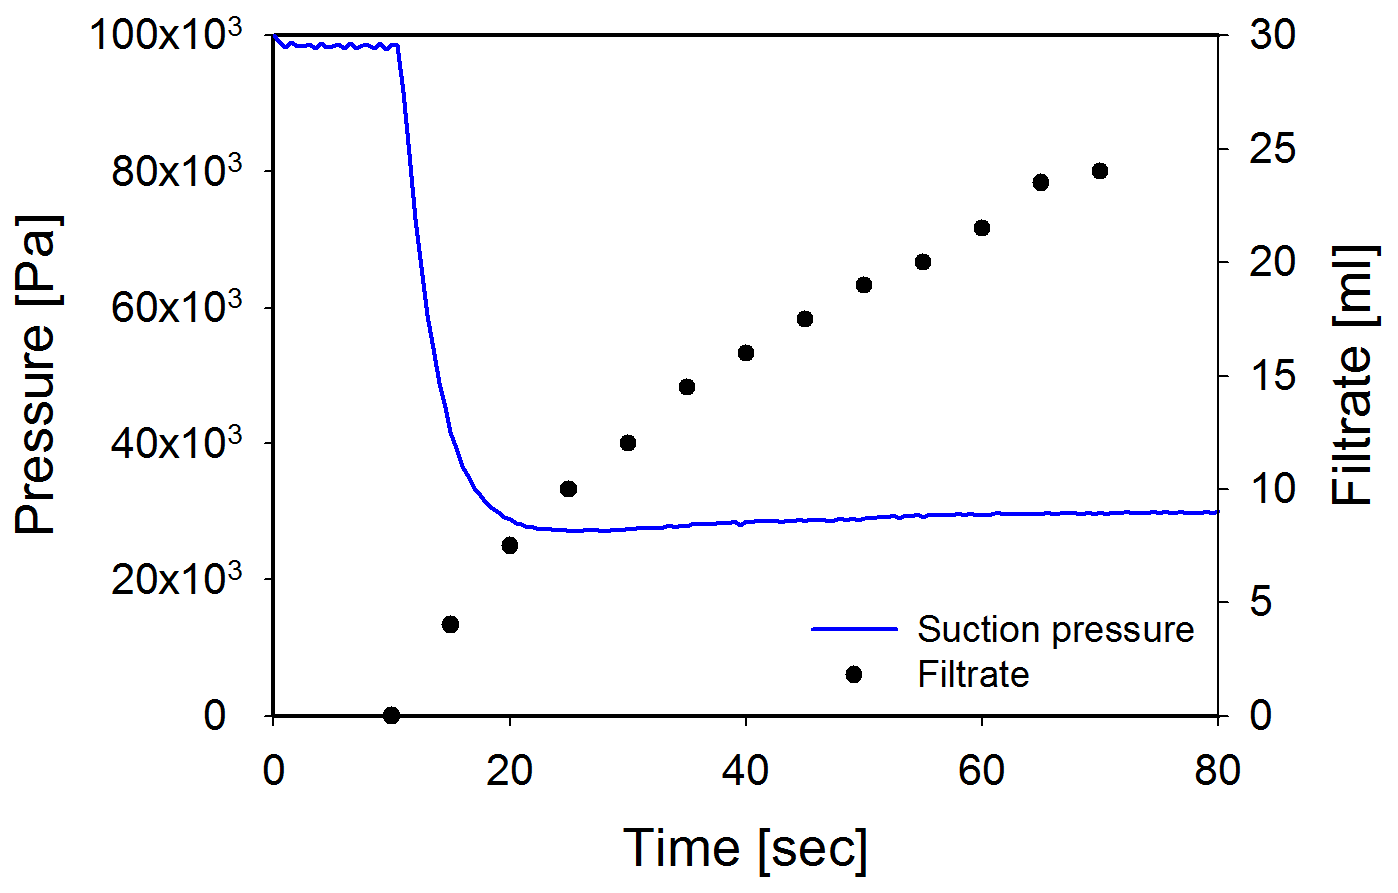 Cumulative filtrate under constant vacuum pressure